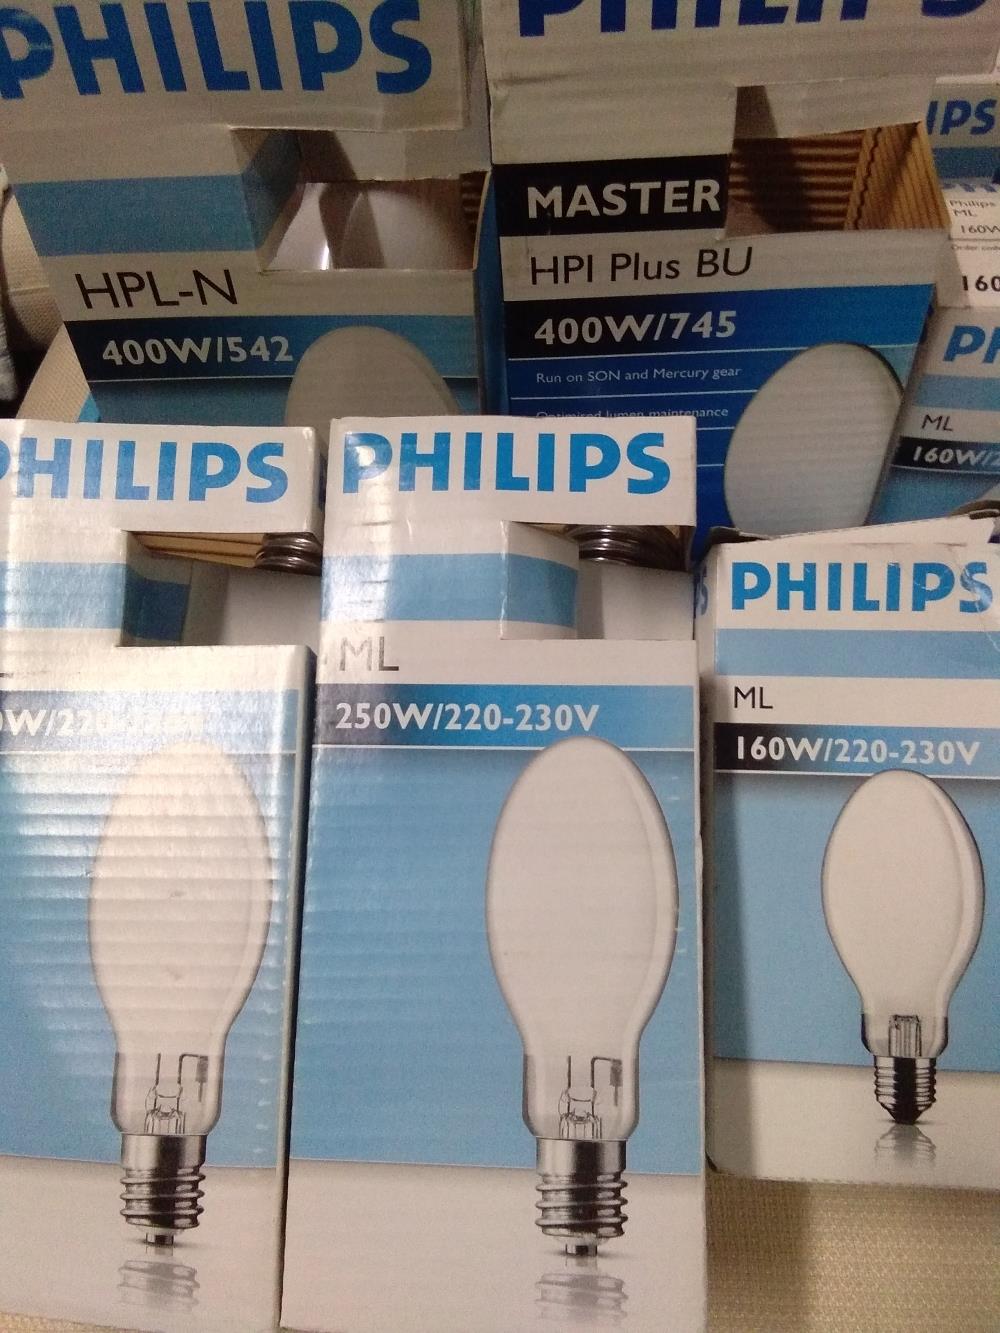 Philips : หลอดไฟ HPL-N 400W / HPI 400W / ML 160/250W **NEW ลดพิเศษ**,นครราชสีมา  Philips หลอดไฟ HPL-N 400W HPI 400W ML160 ML250W โคราช,,Plant and Facility Equipment/Facilities Equipment/Lights & Lighting